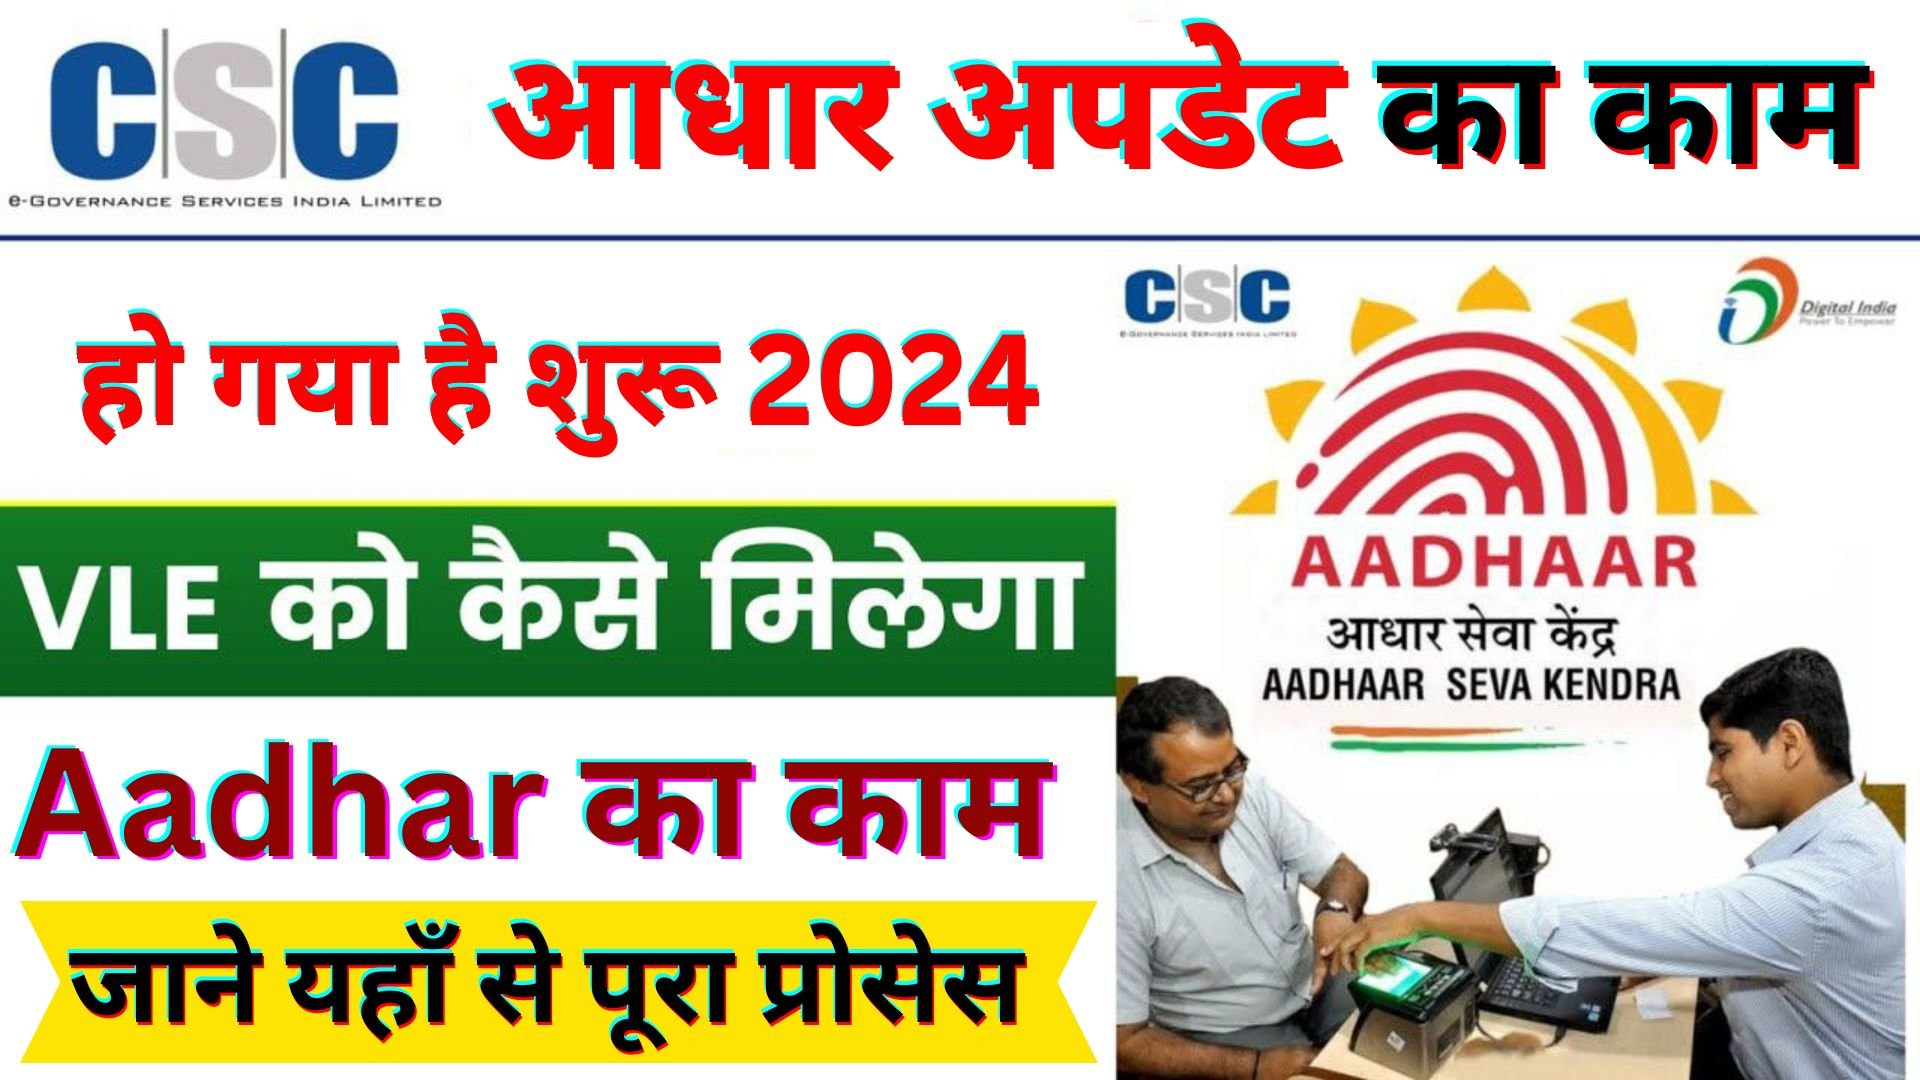 Csc Aadhar Center Registration 2024 | aadhar center kaise khole 2024 | csc se aadhar center kaise le